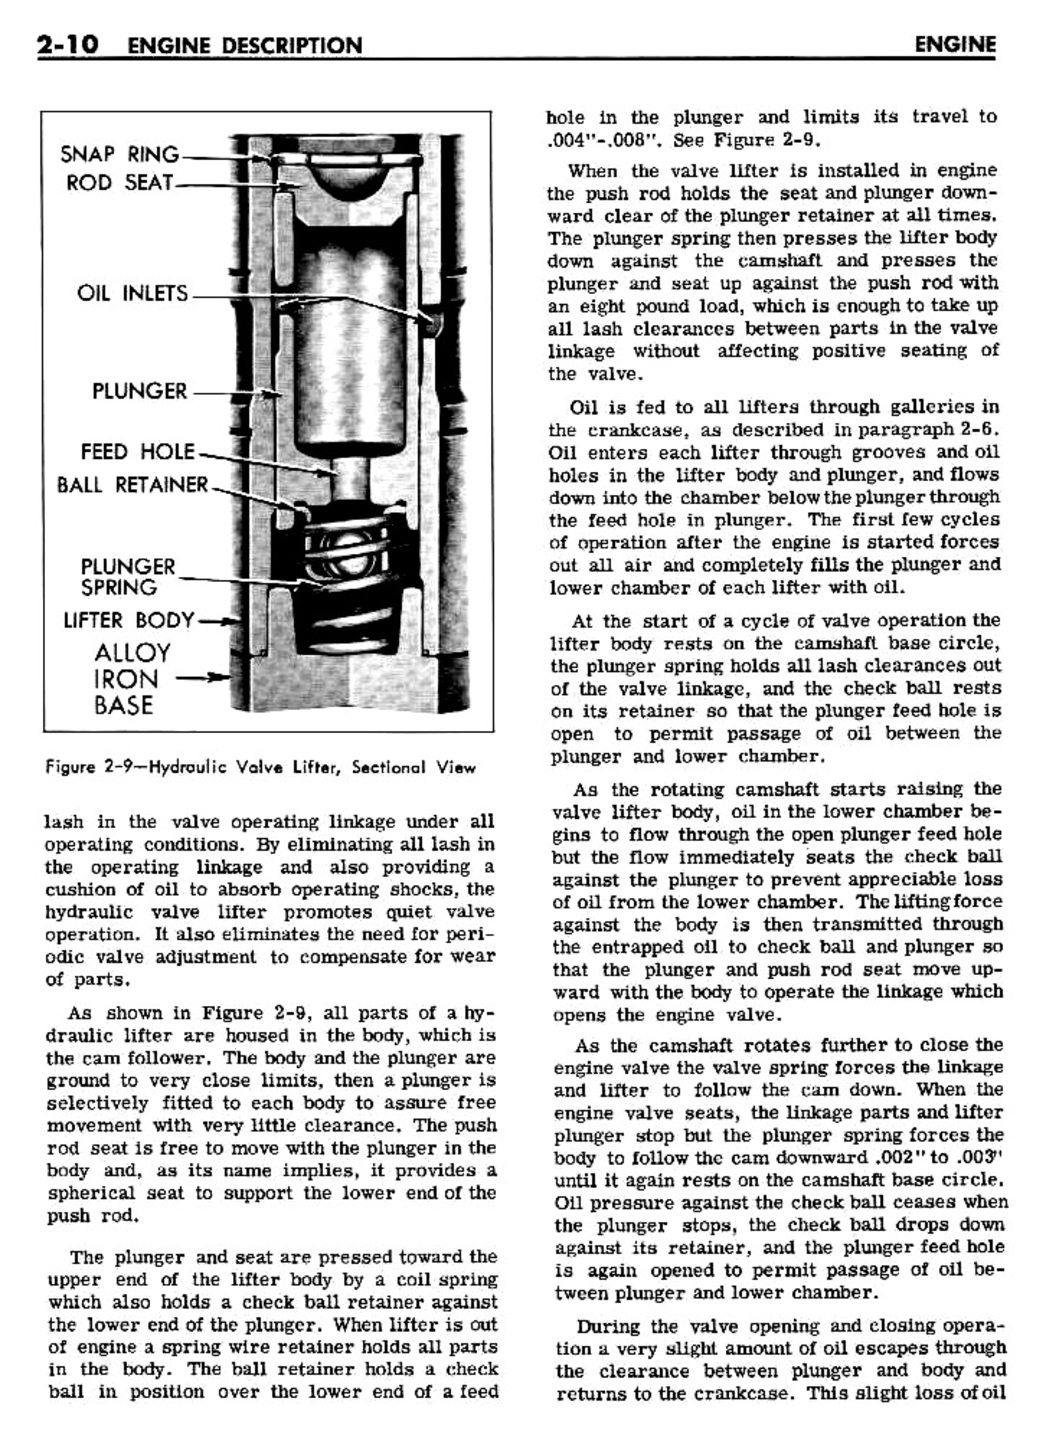 n_03 1961 Buick Shop Manual - Engine-010-010.jpg